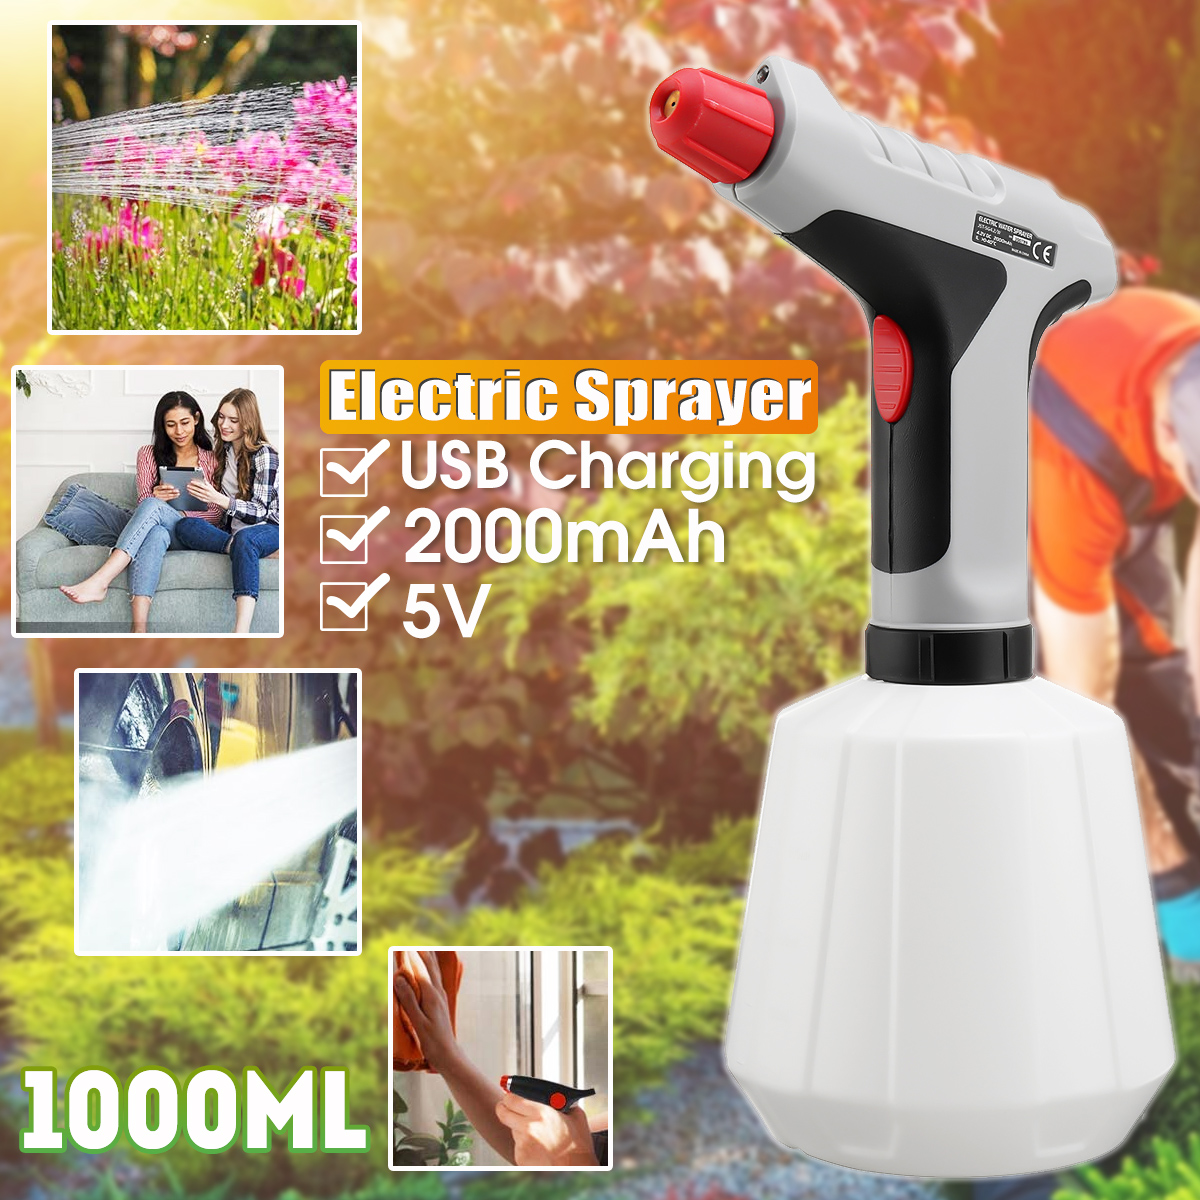 1000ml-Electric-Paint-Sprayer-Household-Flower-Grass-Water-Sprayer-2000mAh-USB-Rechargeable-Sprayer-1879562-4